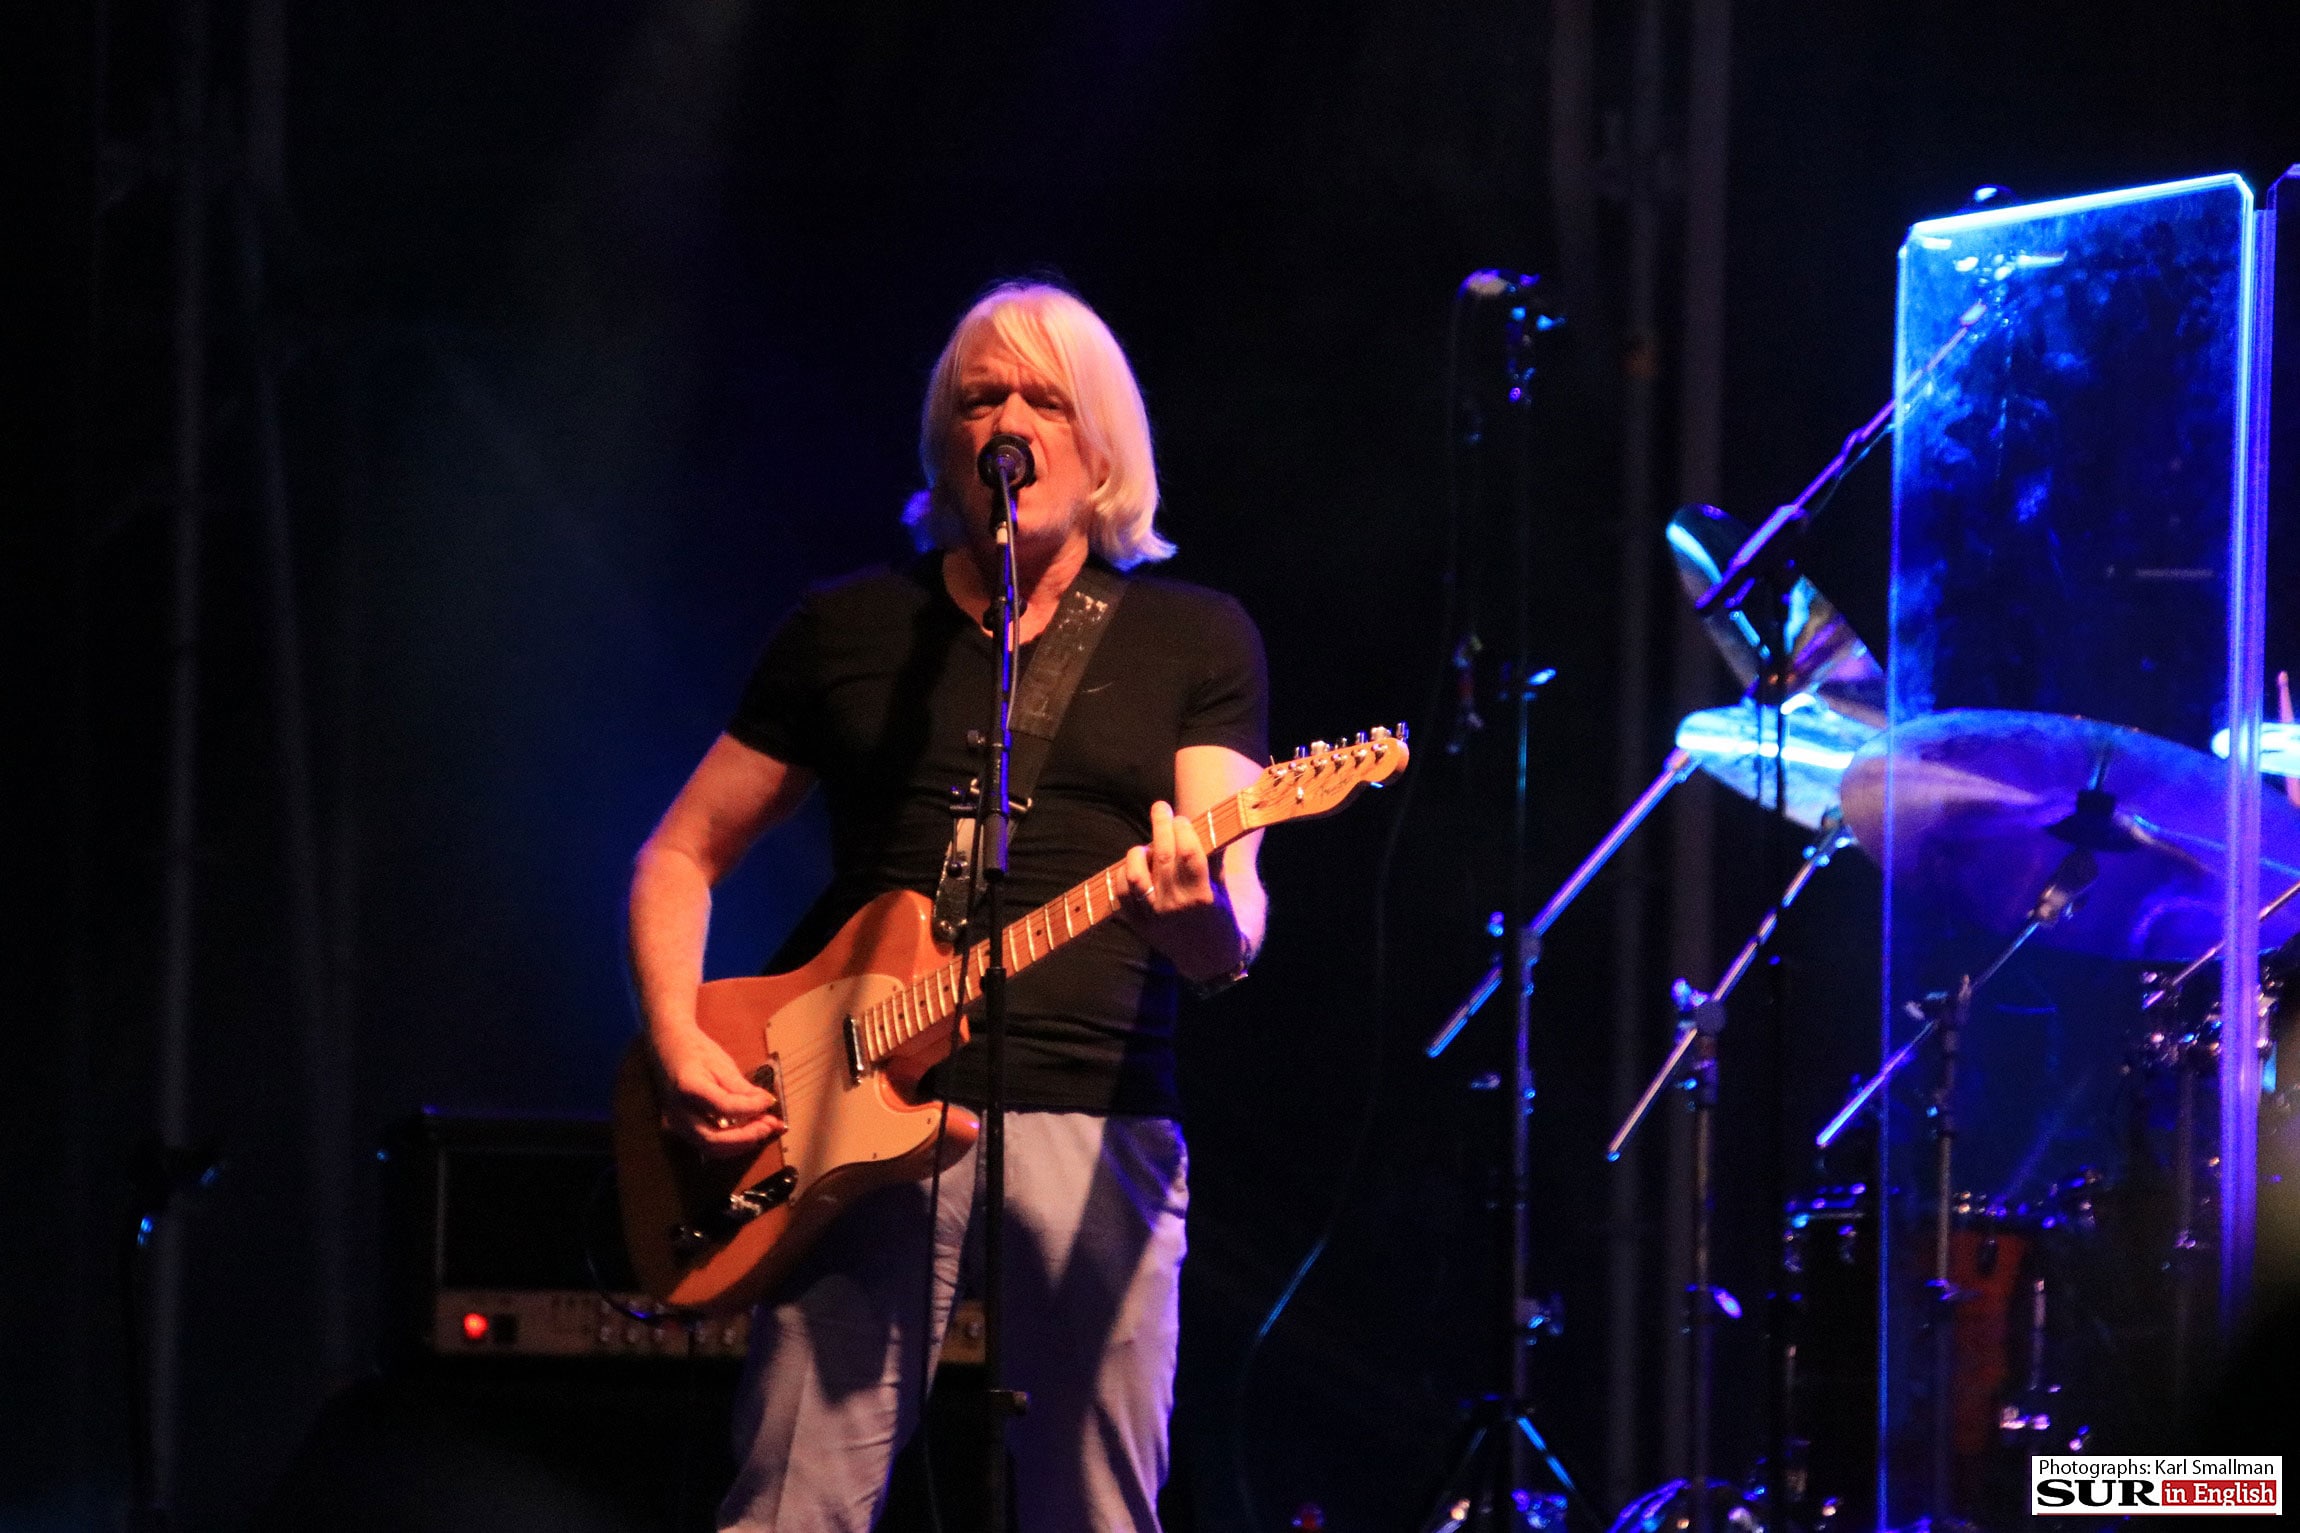 In pictures... Chris de Burgh concert at Marbella Arena